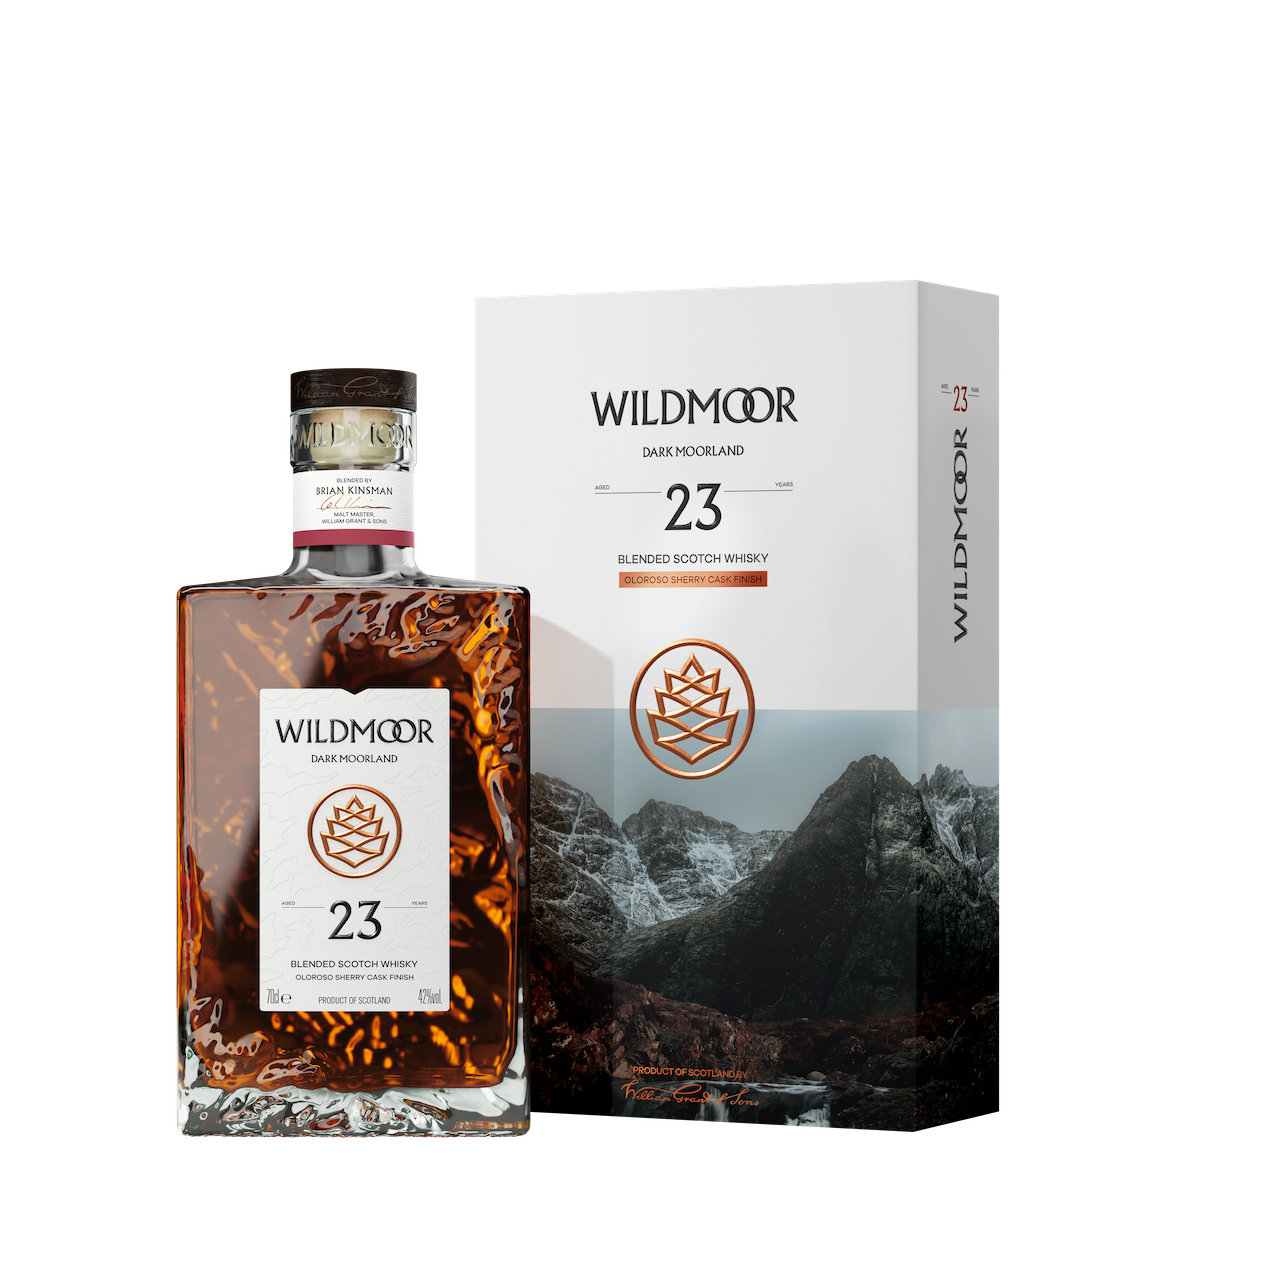 WILDMOOR a whisky more wild - Dark moorland